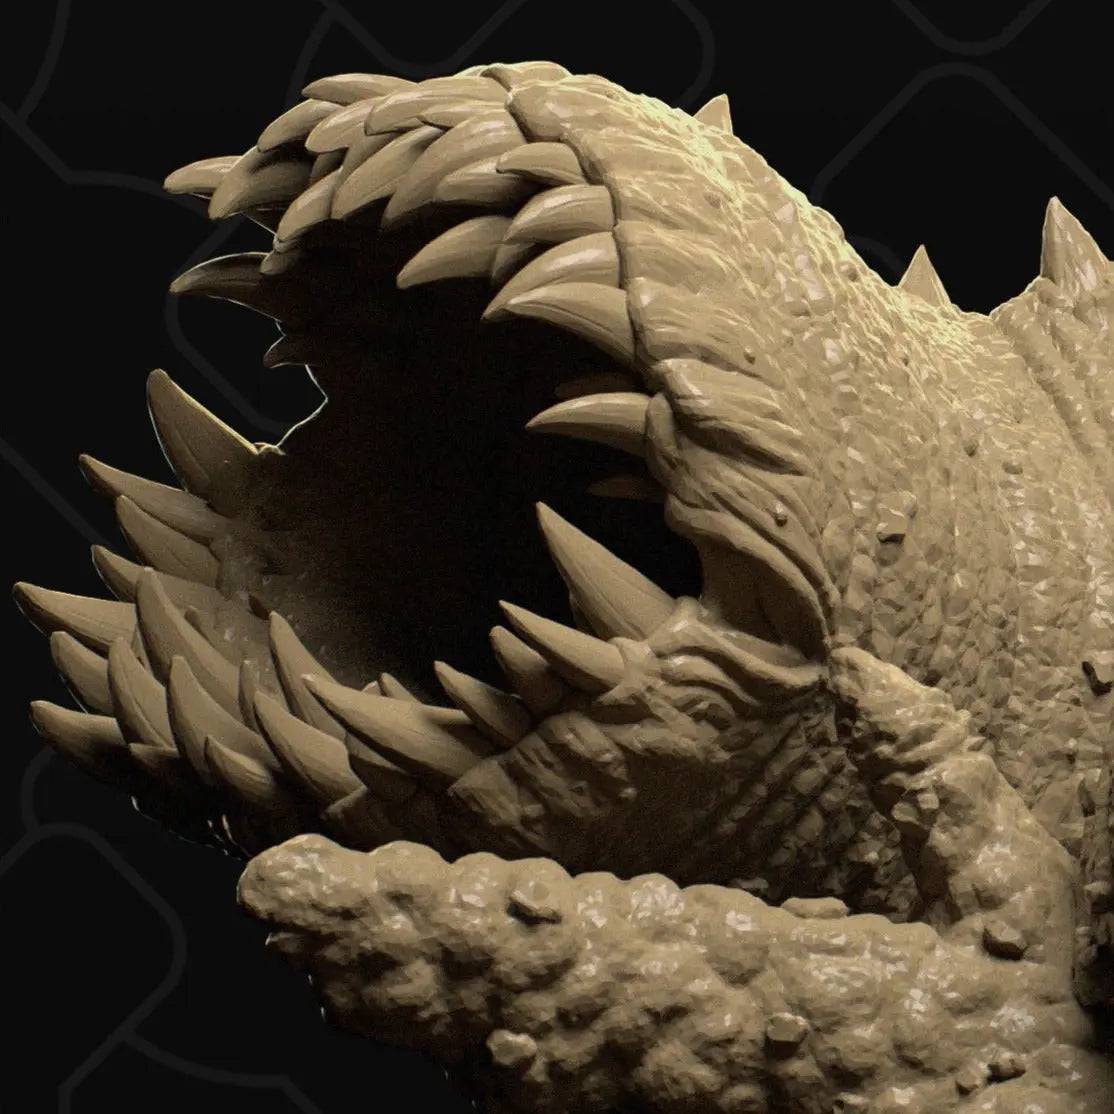 Sand Worm Bursting | D&D TTRPG Monster Miniature | Collective Studio - Tattles Told 3D